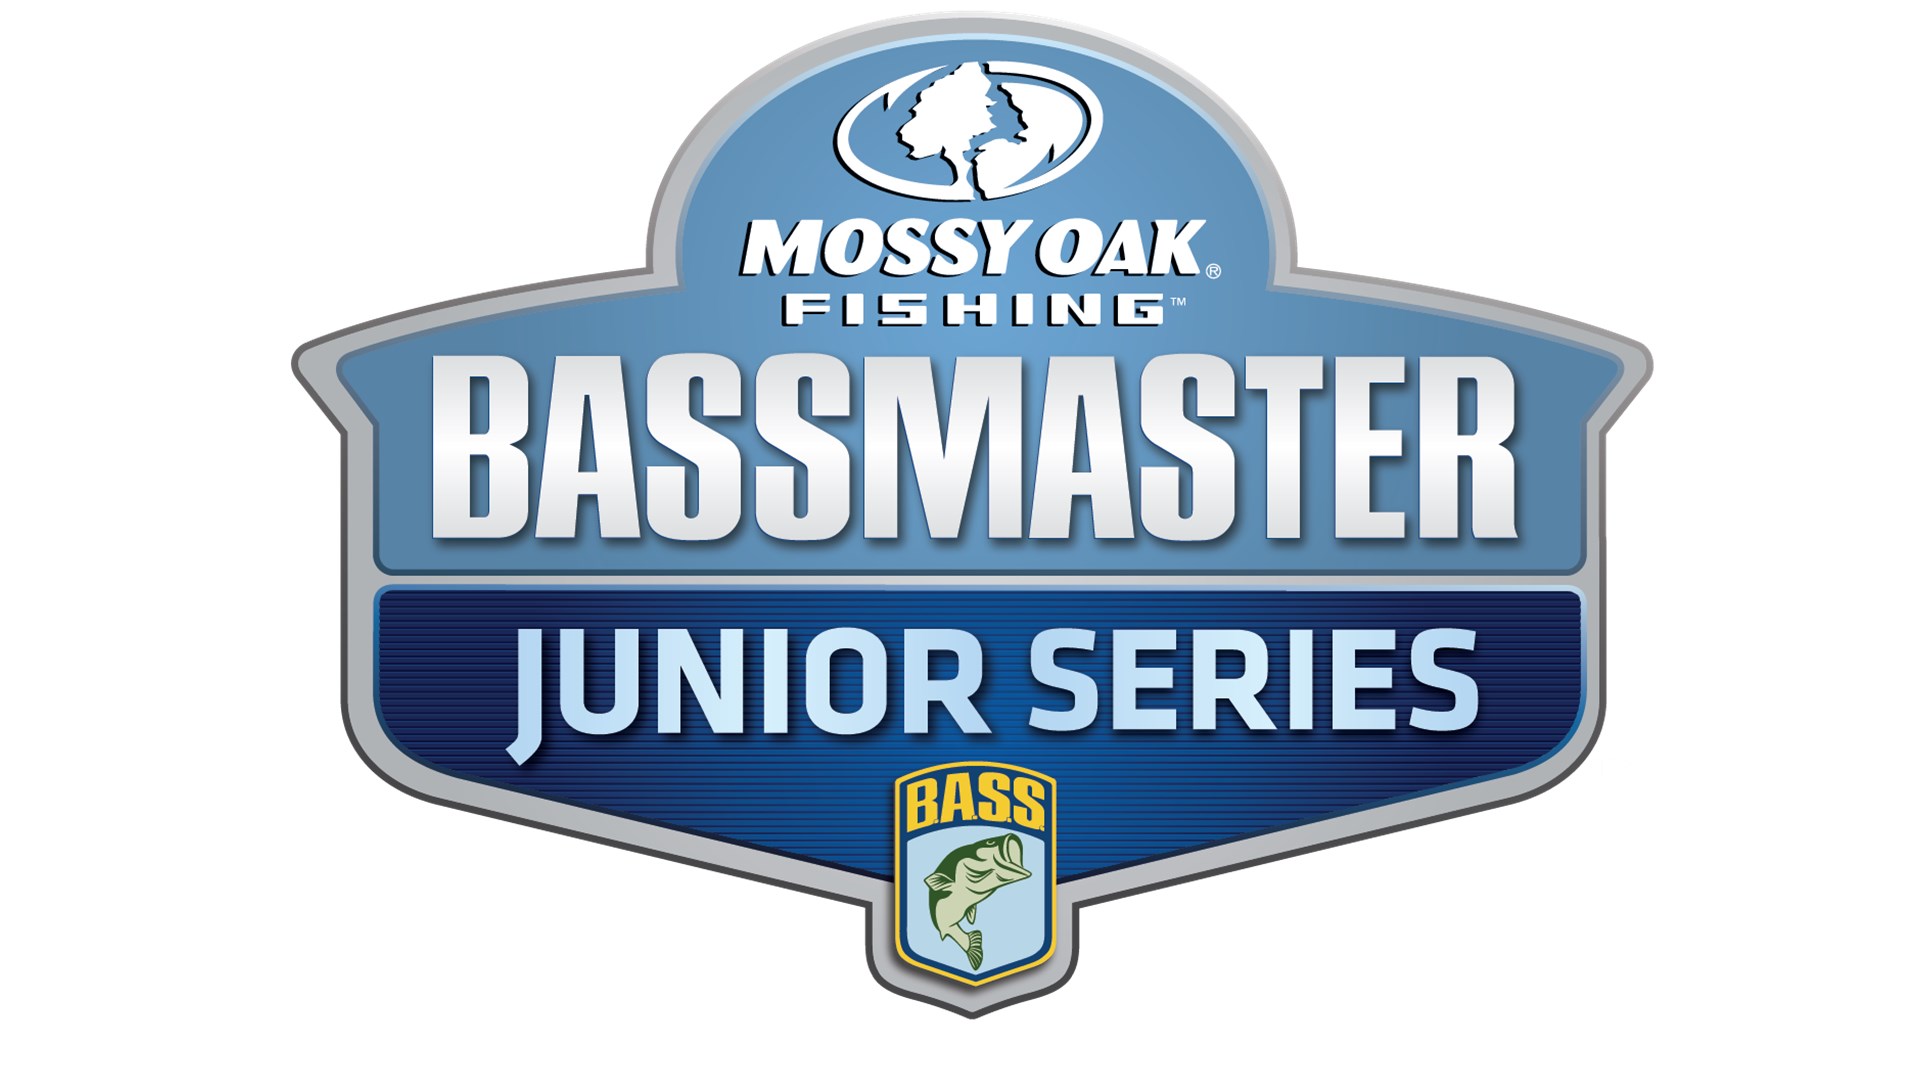 Mossy Oak Fishing Bassmaster Junior Series